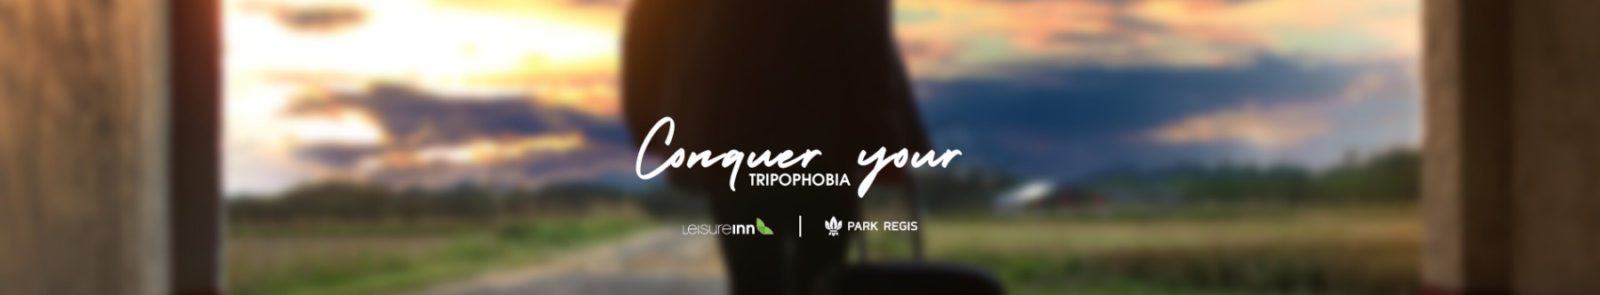 Conquer your Tripophobia